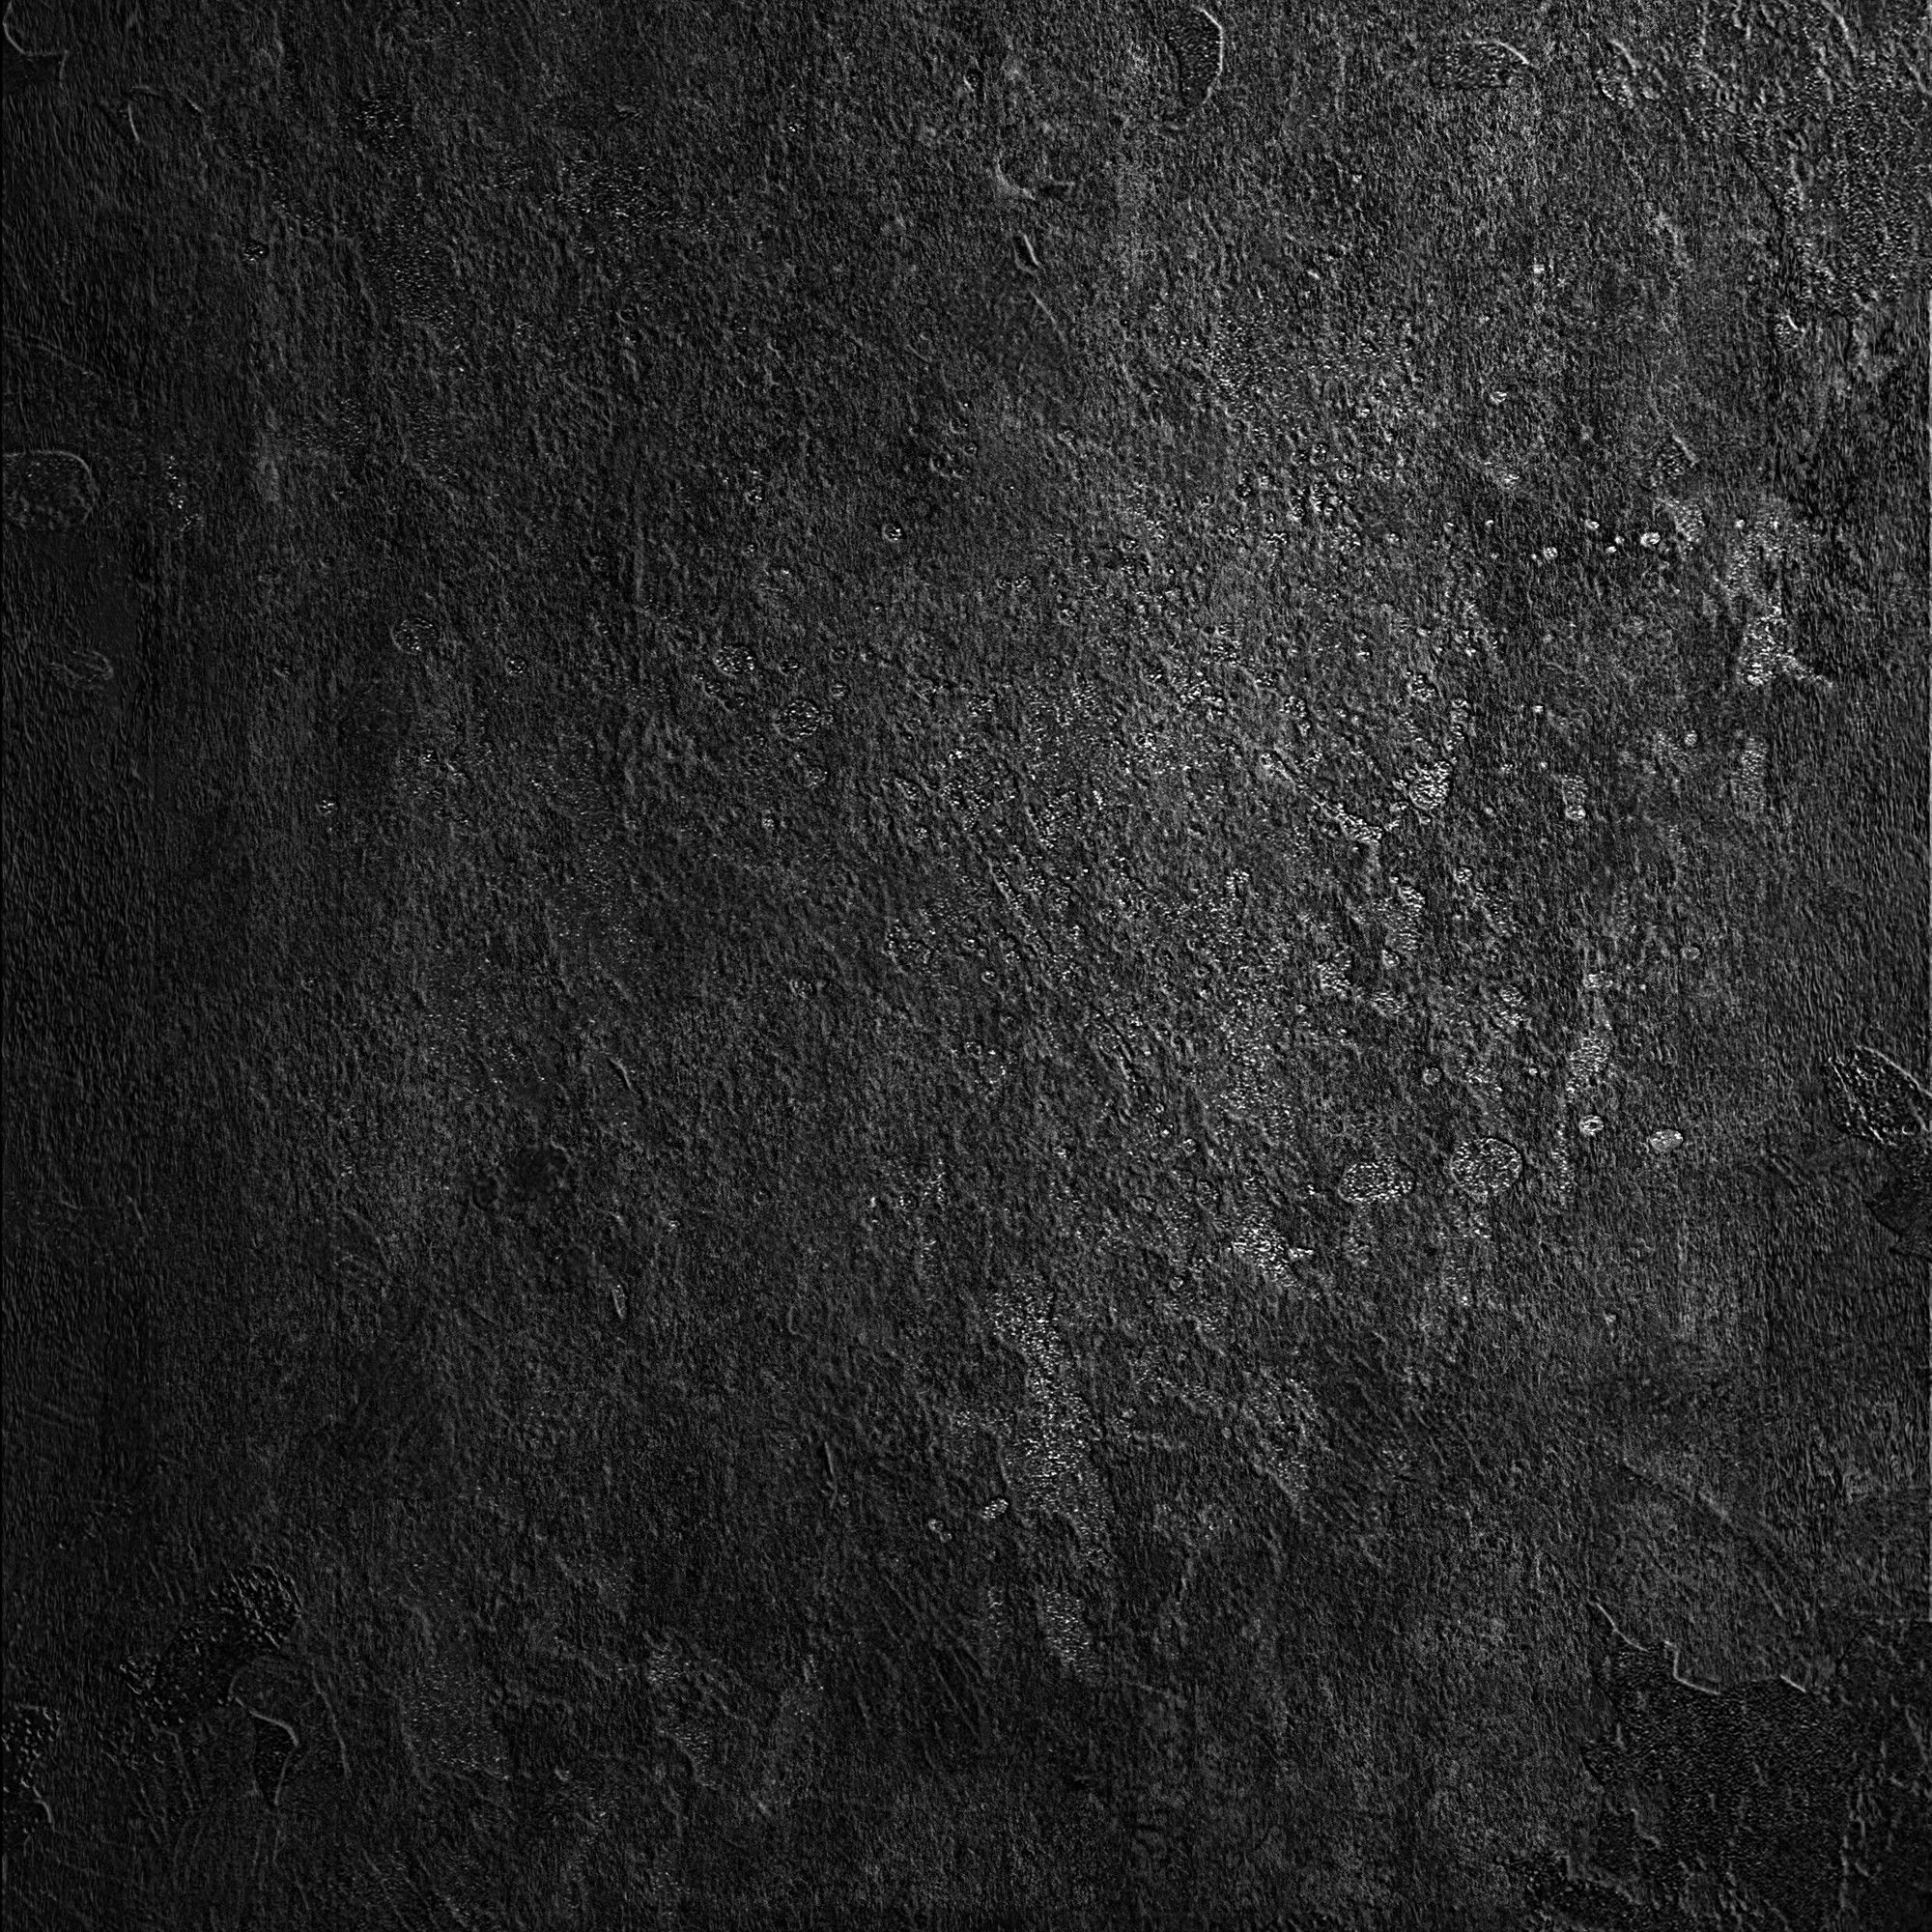 metal photo print black and white